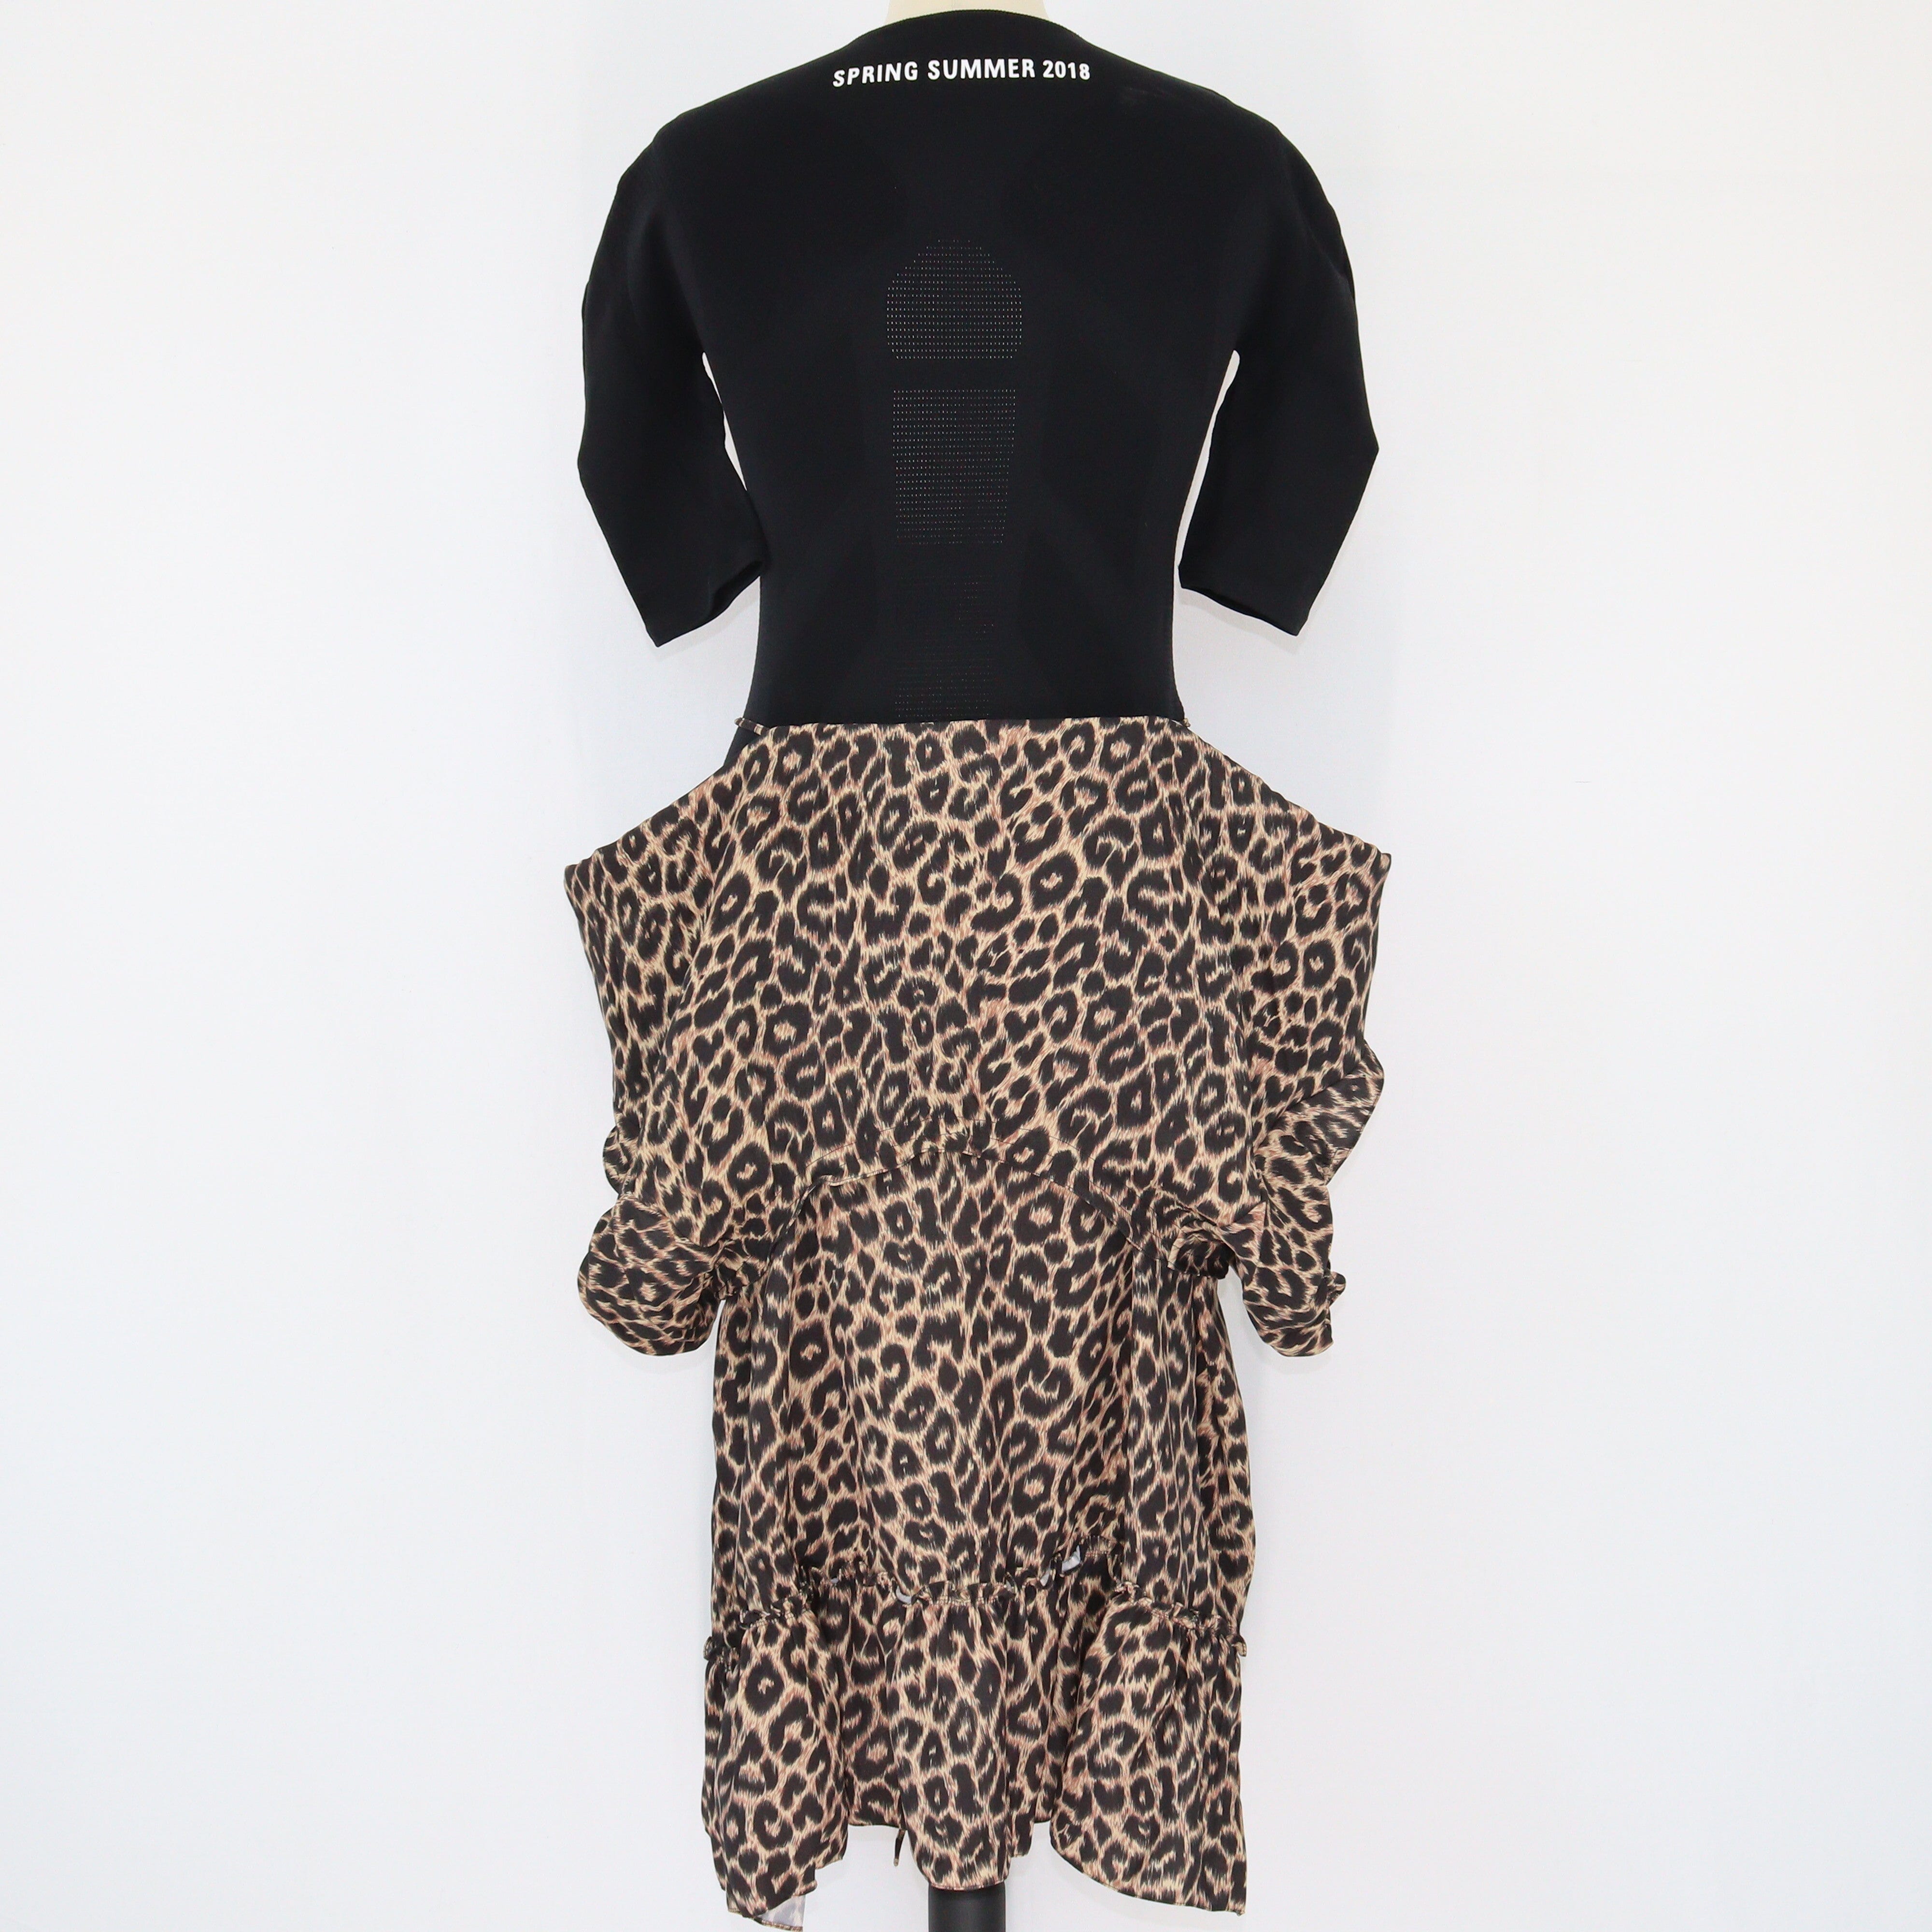 Black Leopard Print Spring Summer 2018 Dress Clothings Balenciaga 